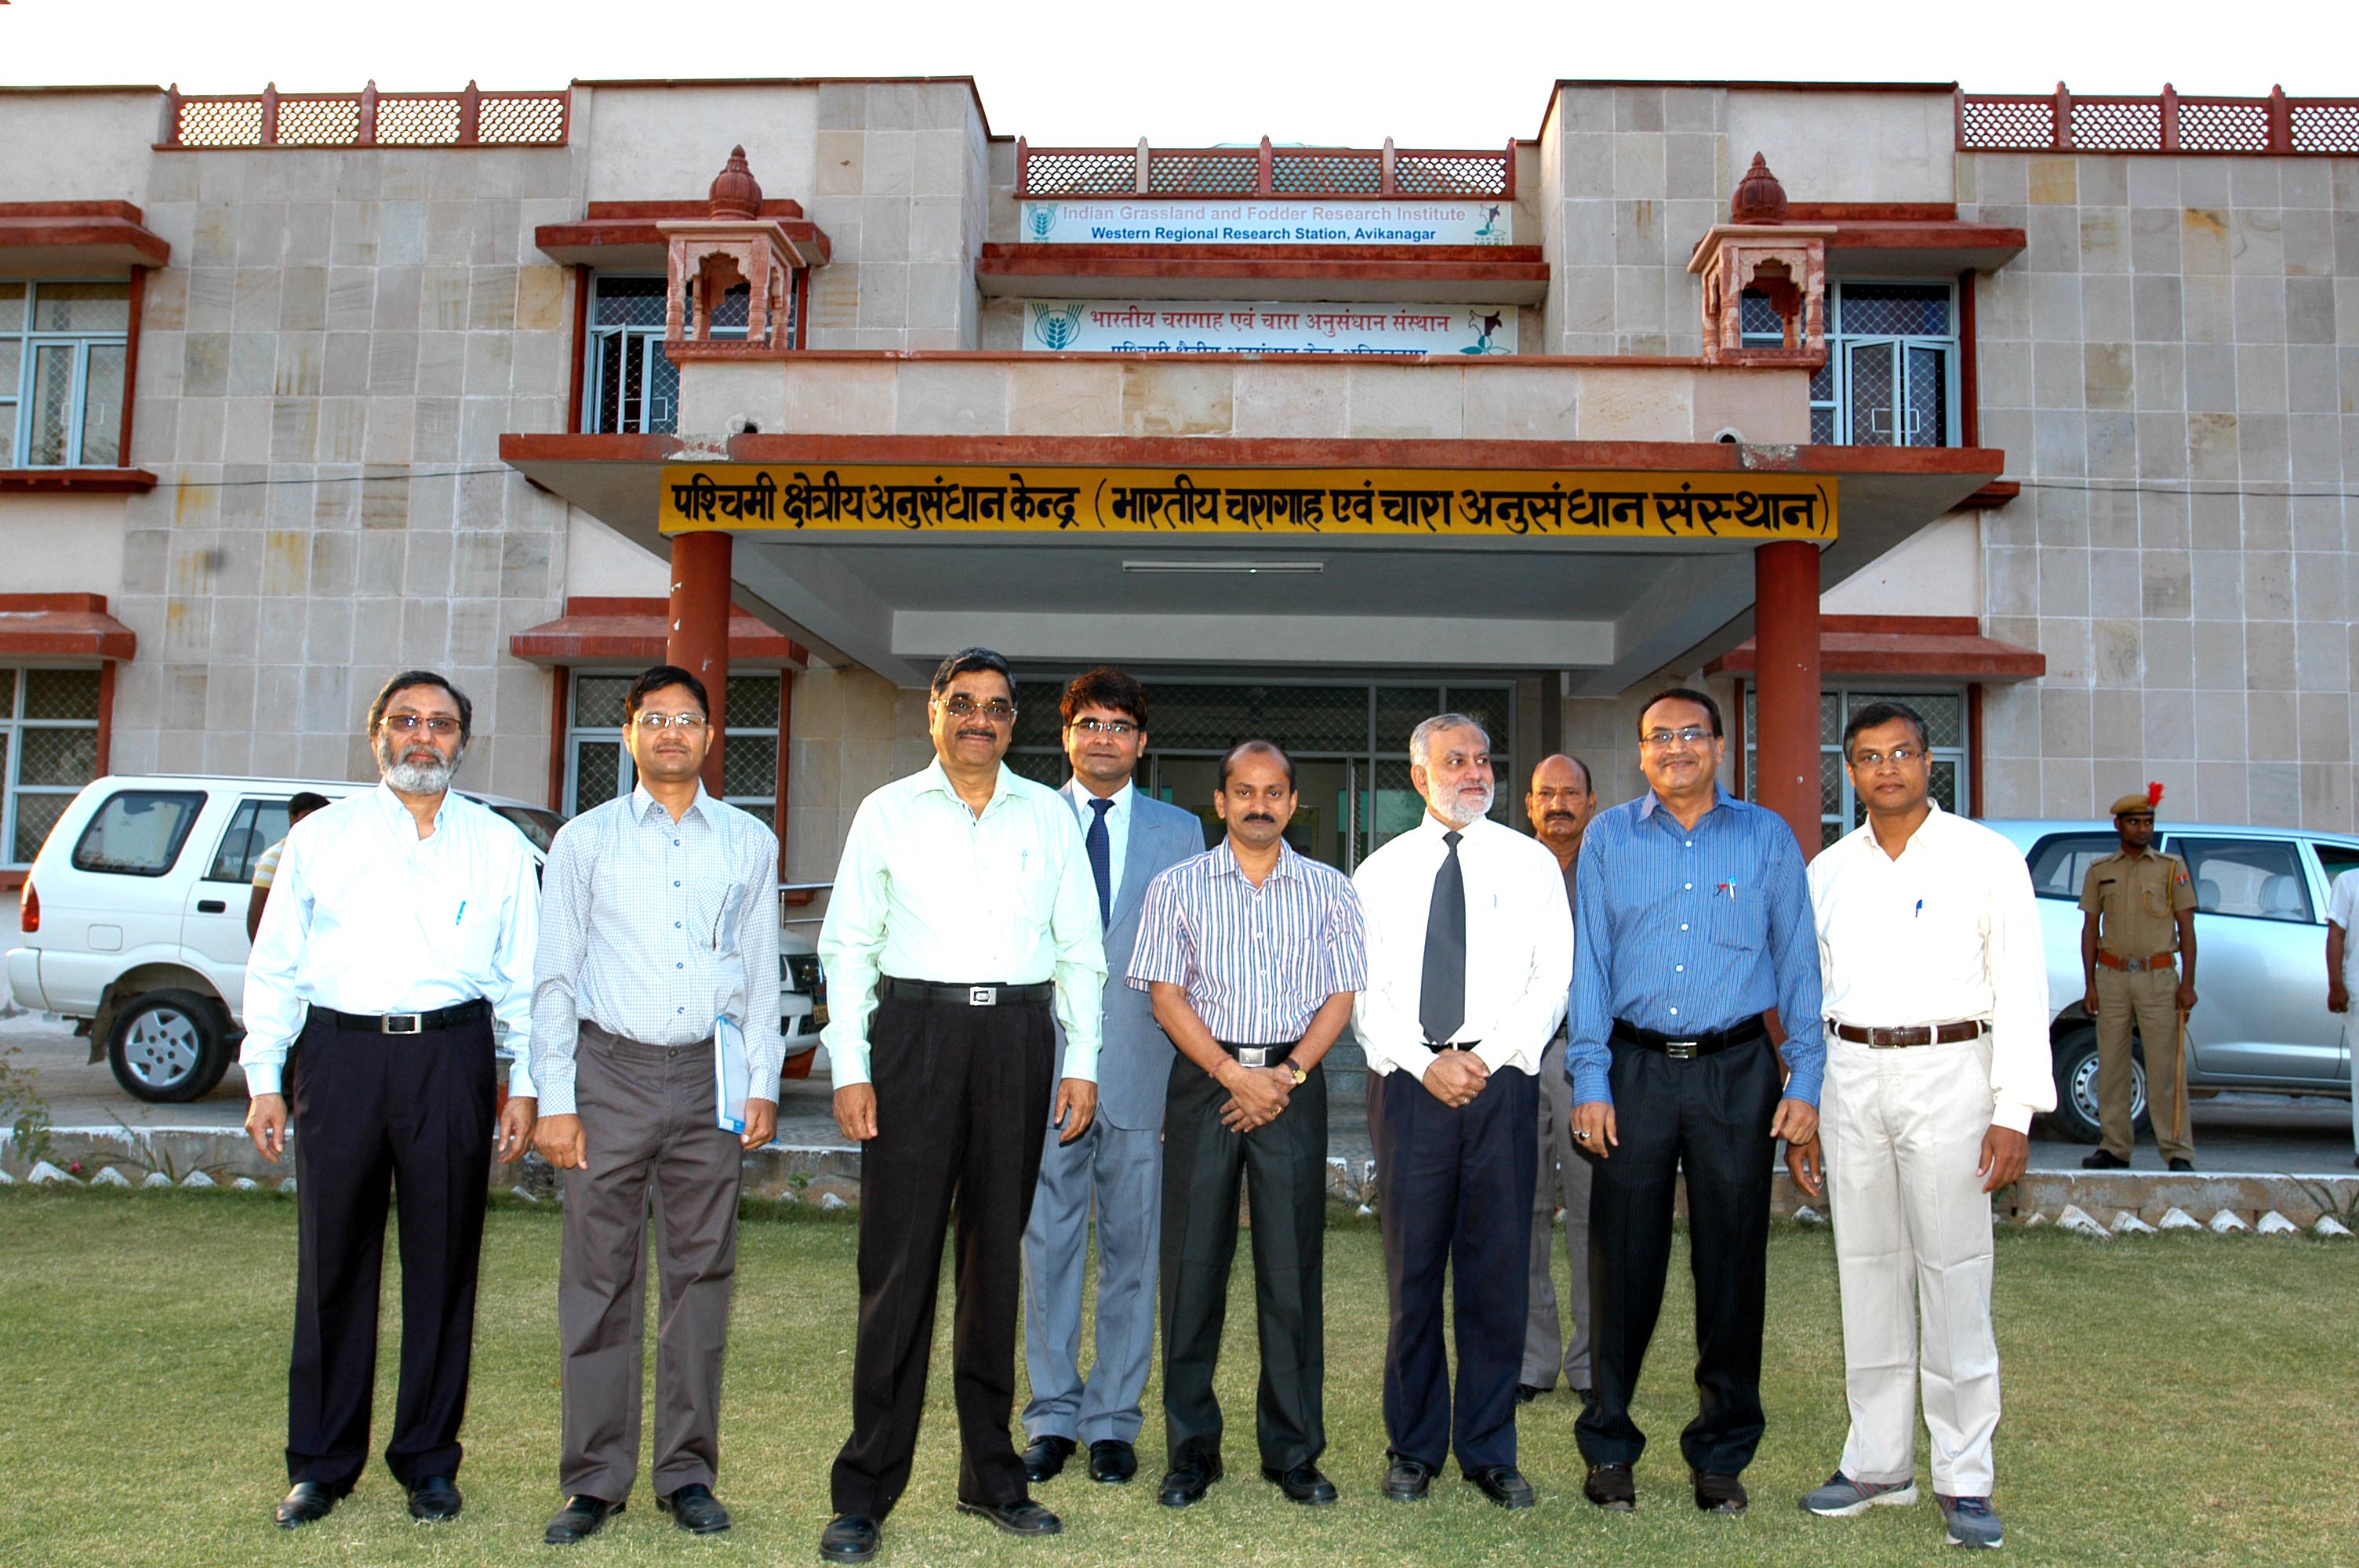 Visit to WRRC IGFRI substation @ Avikanagar